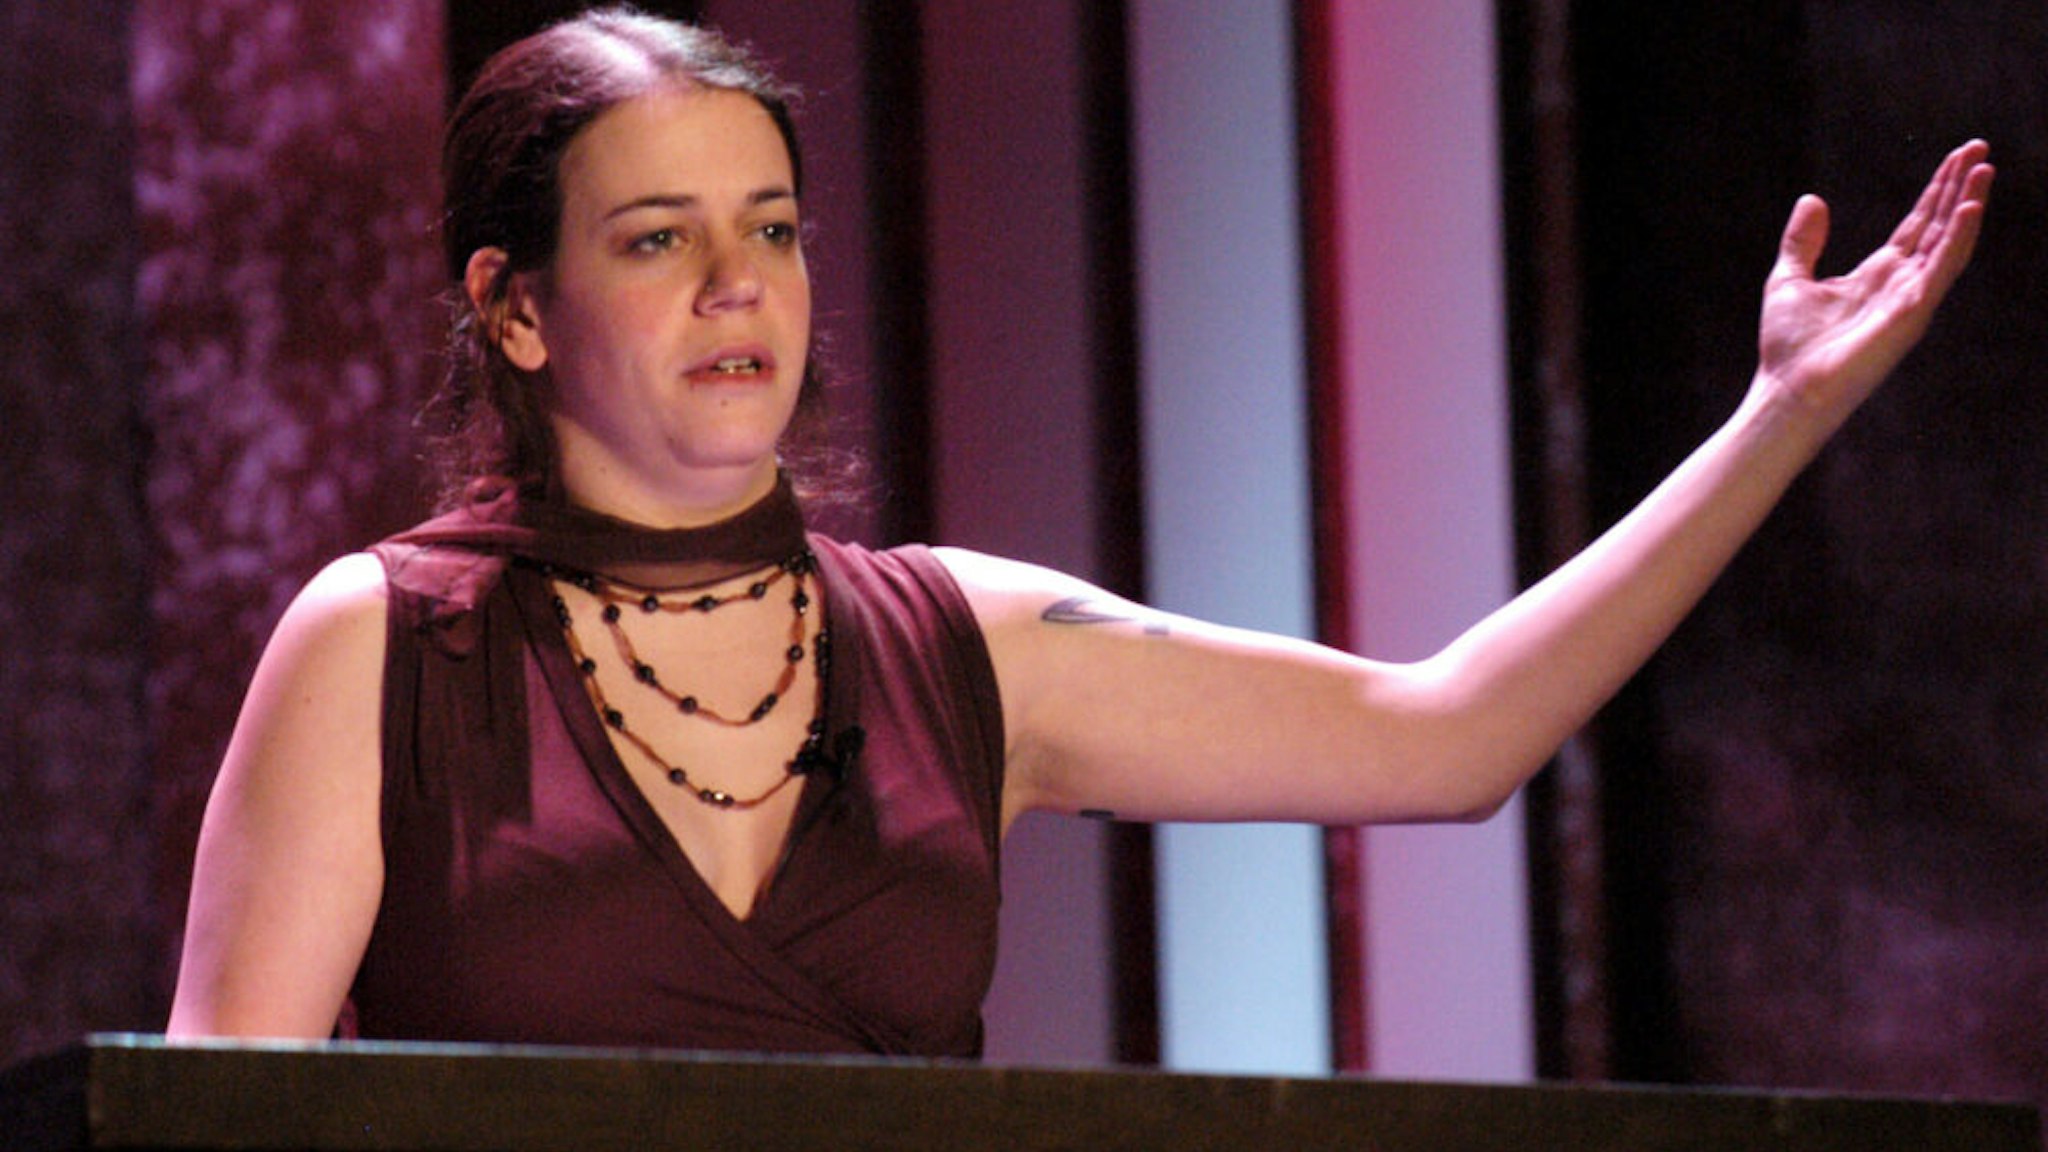 Rebecca Drysdale during US Comedy Arts Festival 2005 - Festival Awards in Aspen, Colorado, United States.